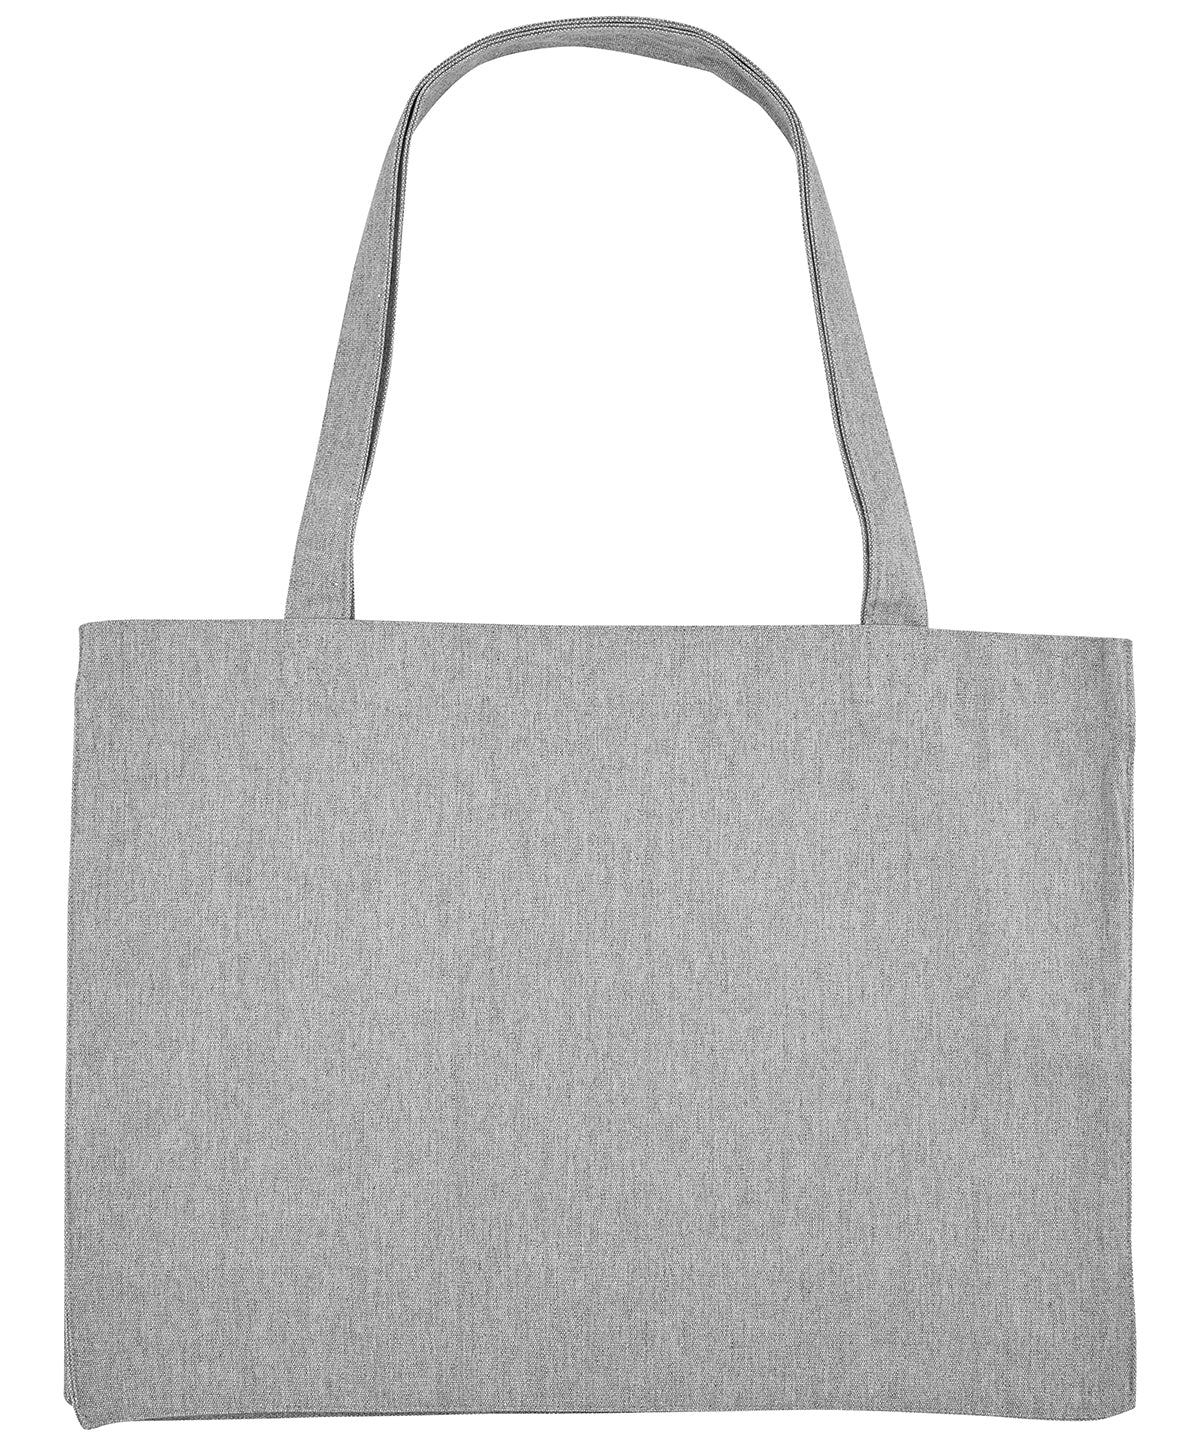 Woven shopping bag (STAU762)